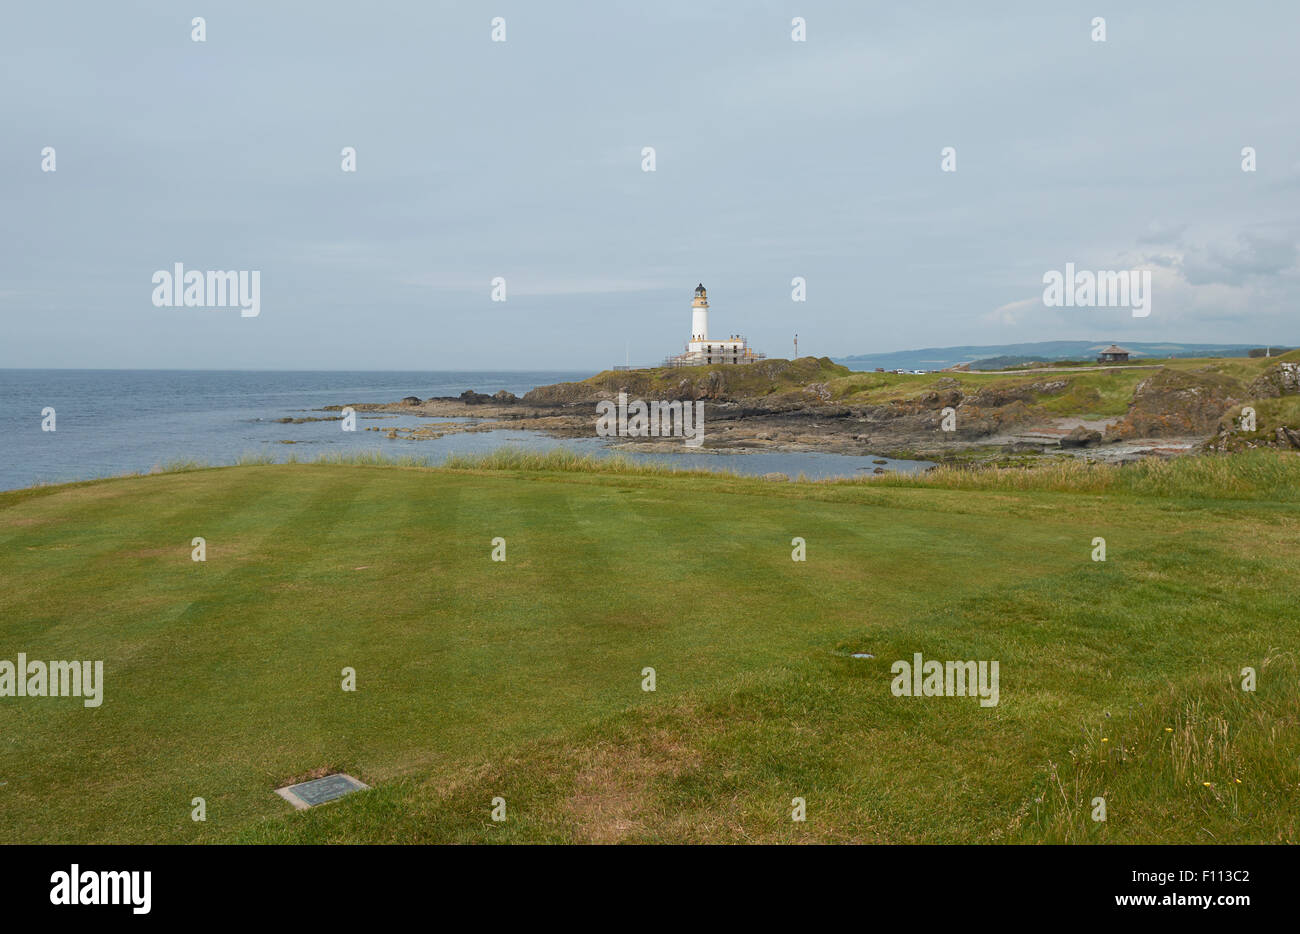 Trump Turnberry Resort - Turnberry Lighthouse overlooking the tee - Ayrshire Coast, Scotland, UK Stock Photo